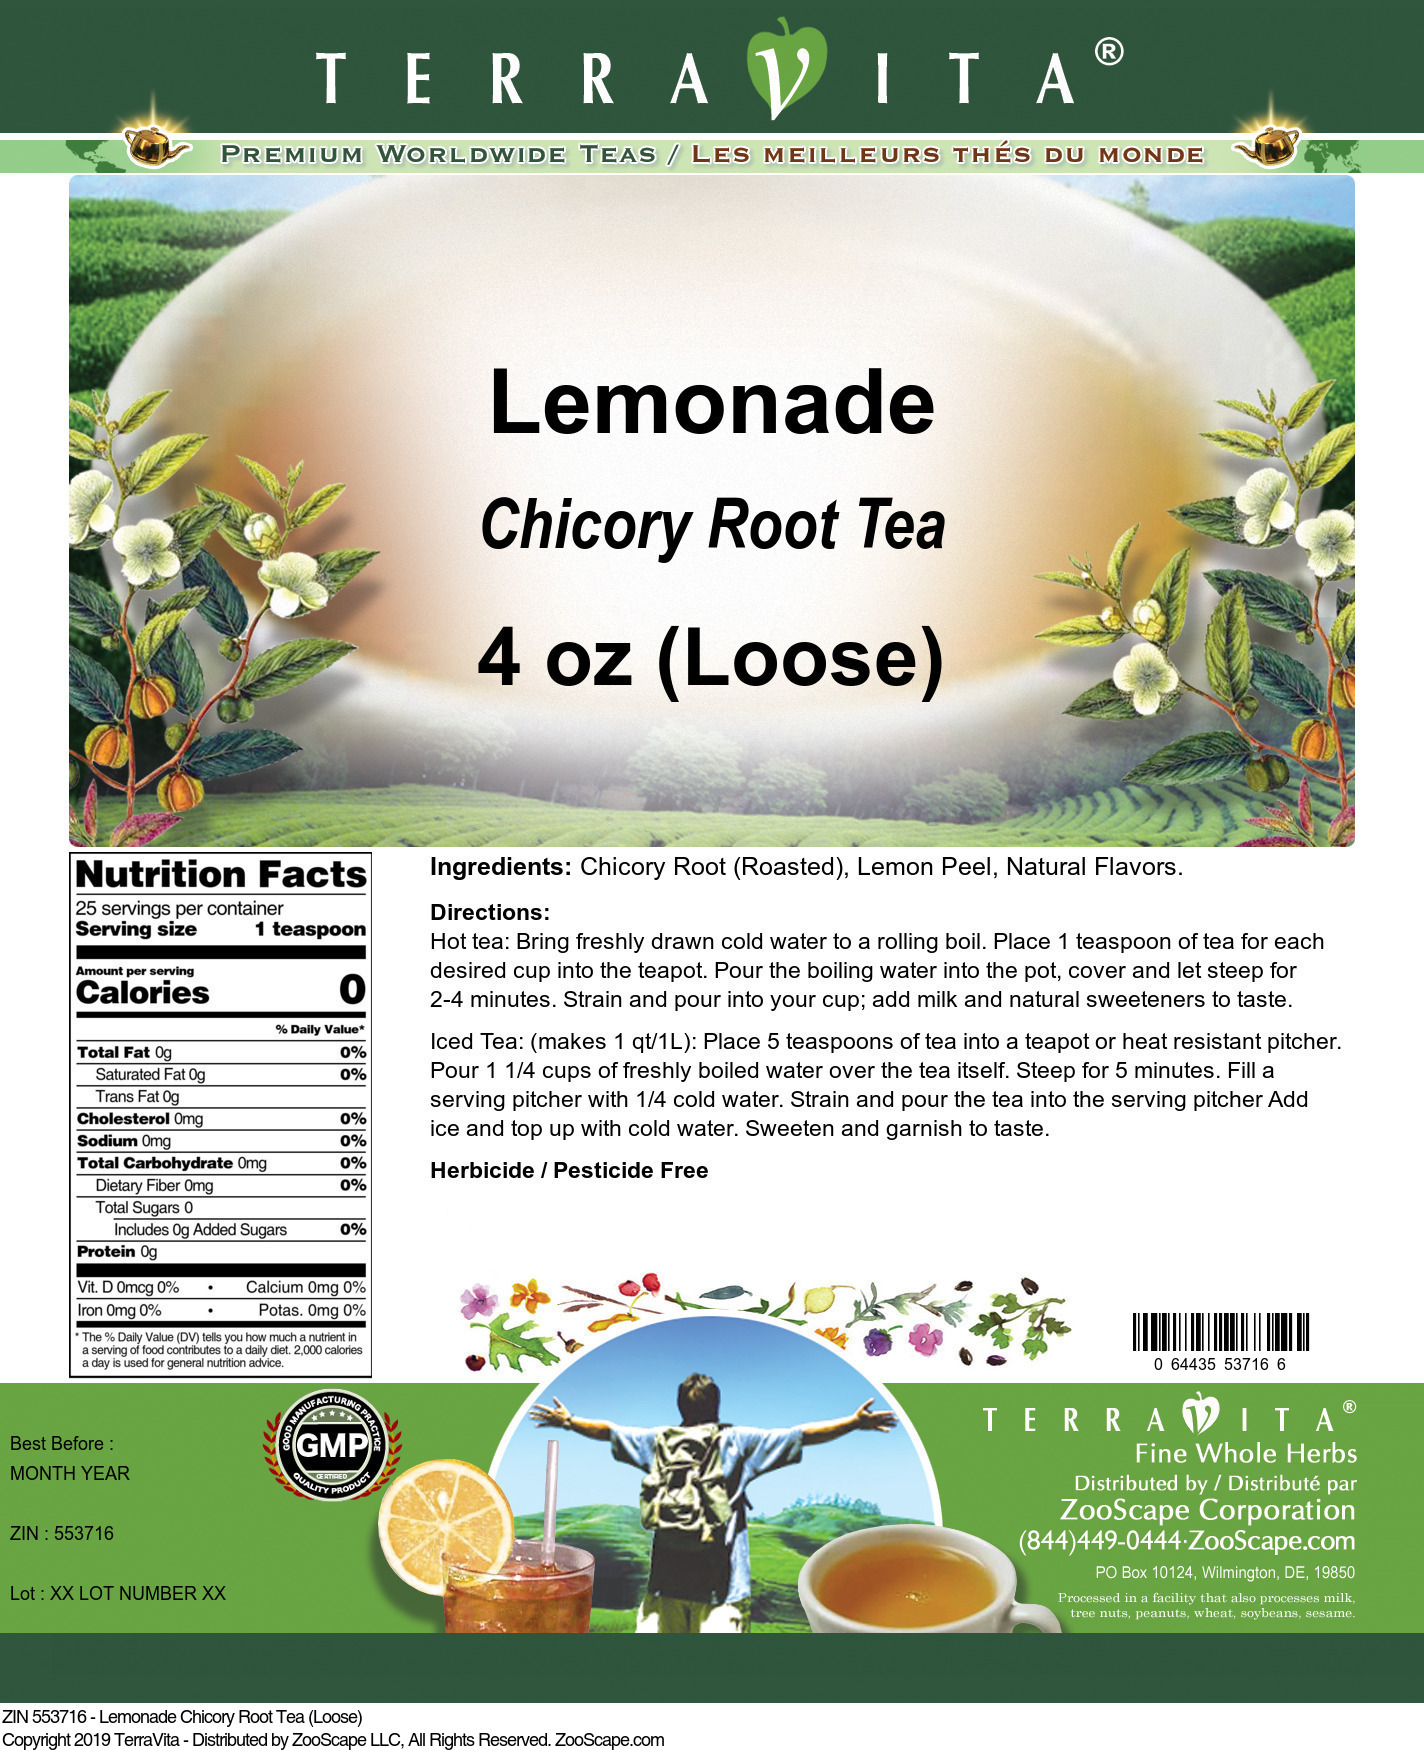 Lemonade Chicory Root Tea (Loose) - Label